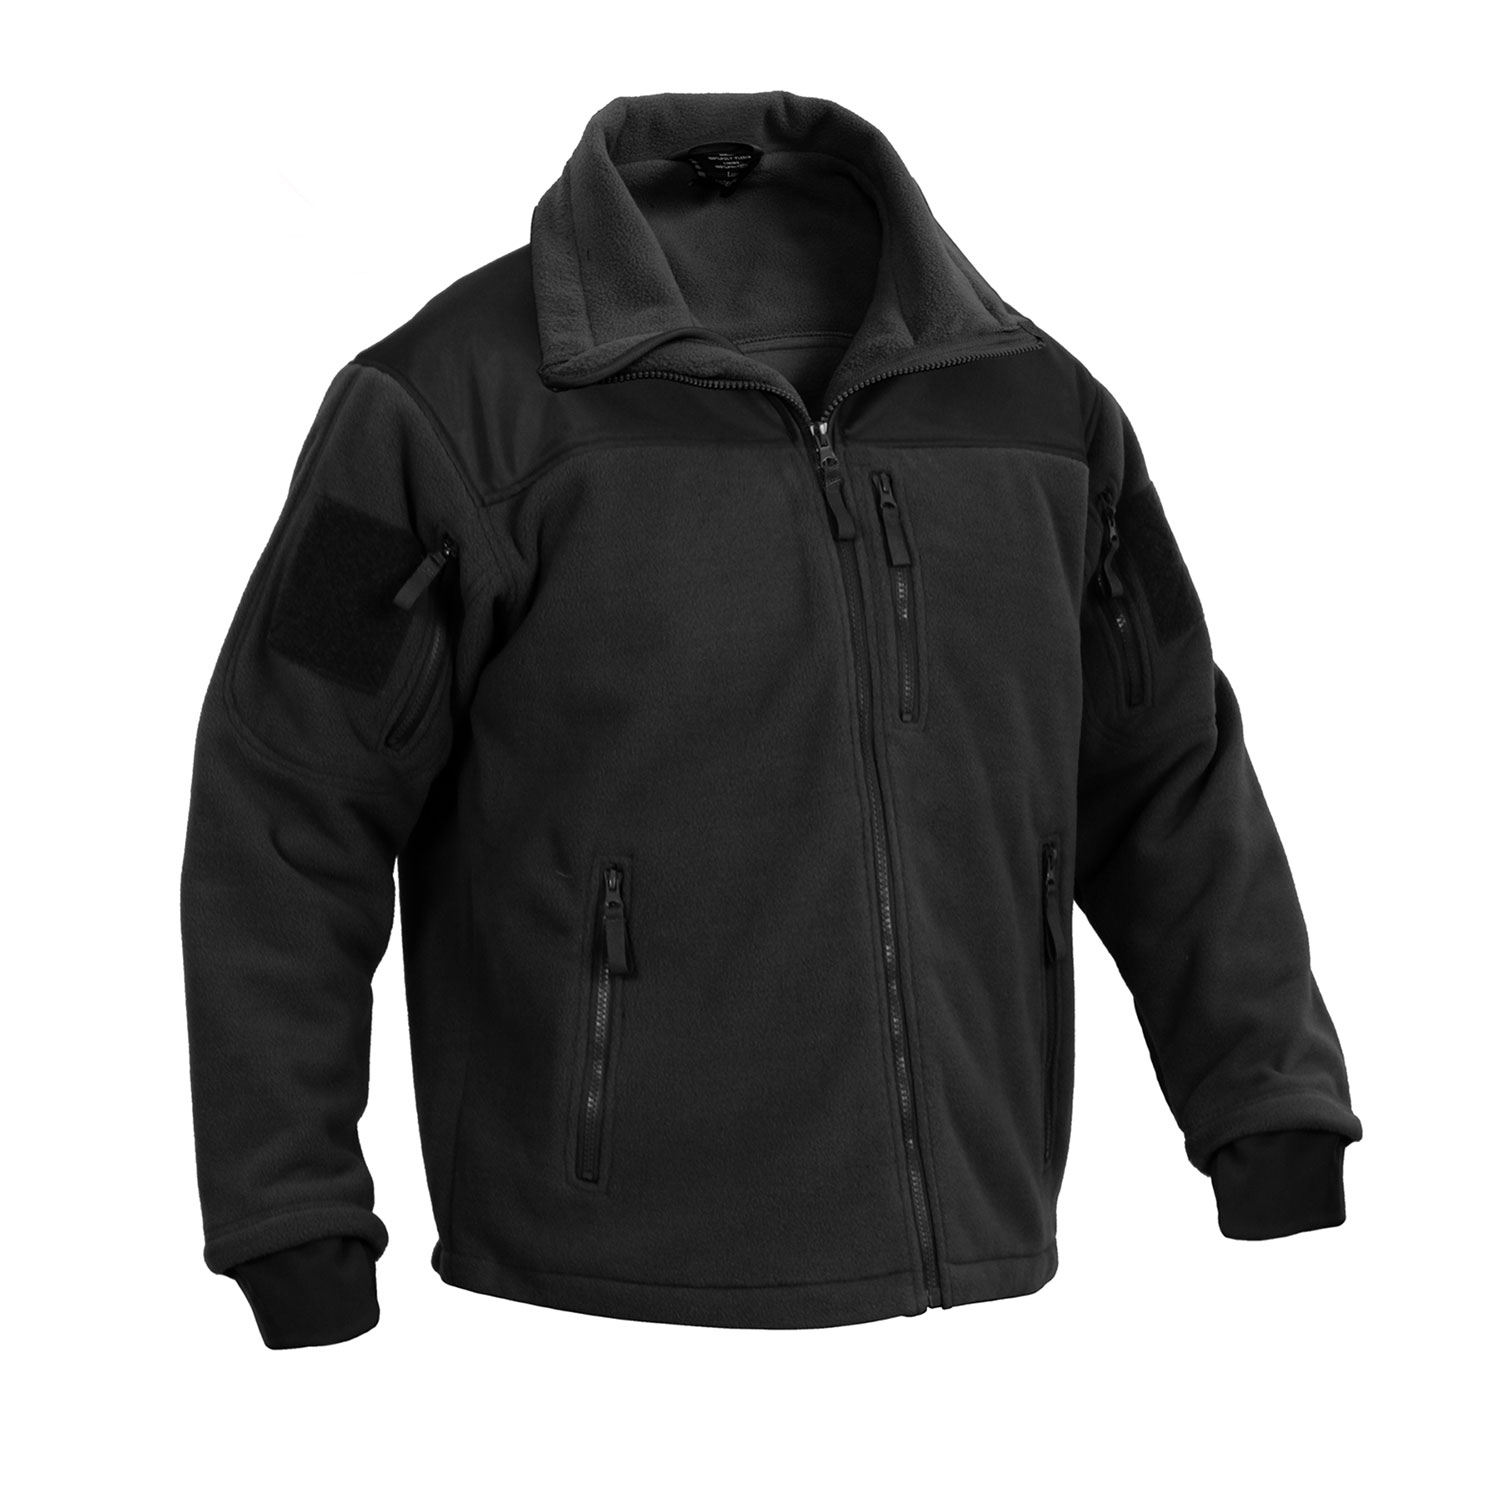 
Rothco Spec Ops Tactical Fleece Jacket